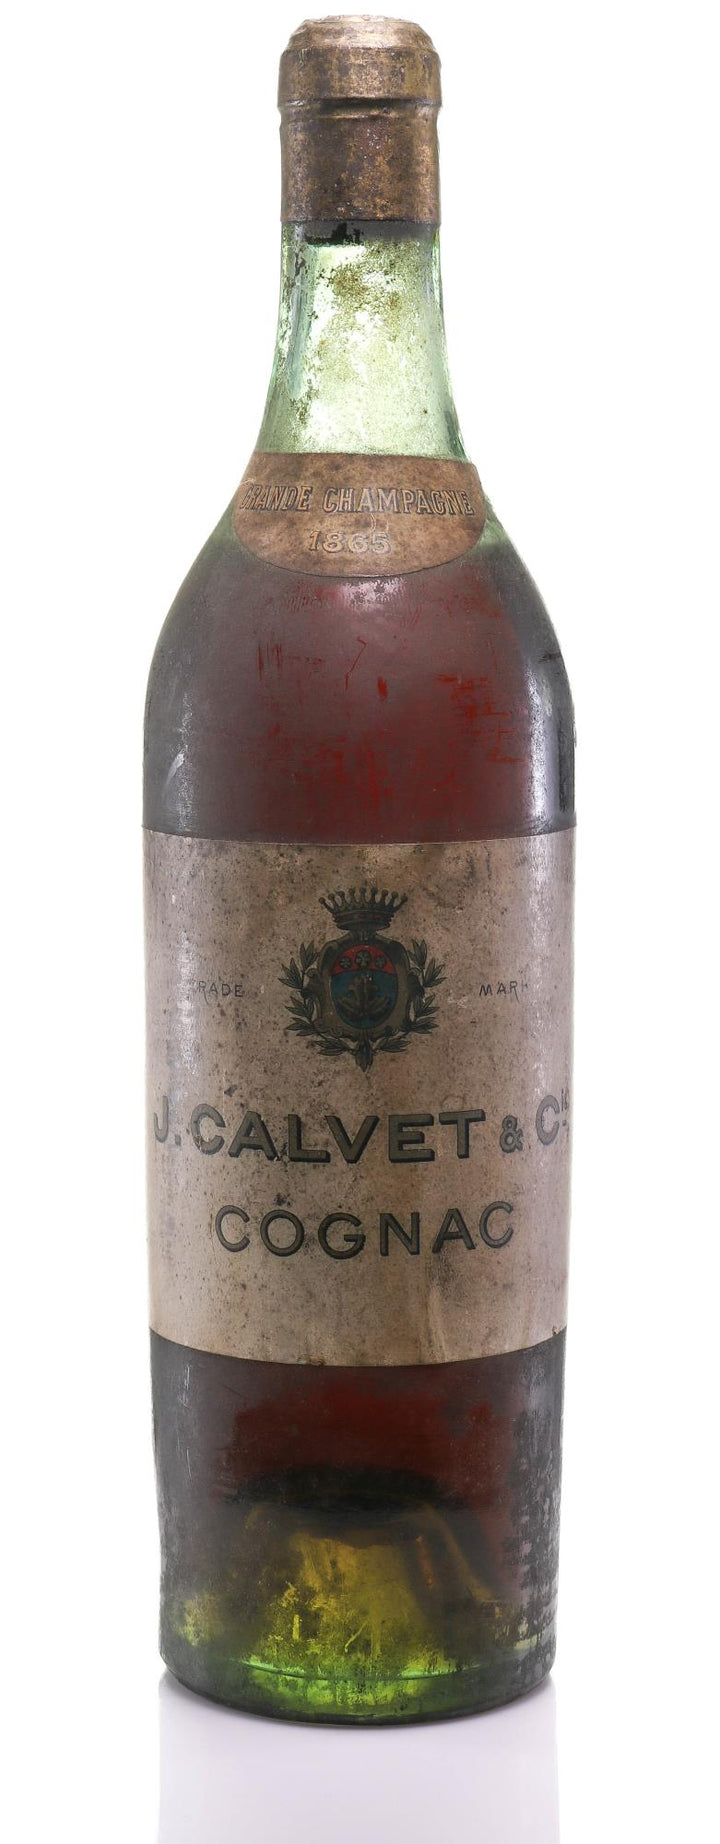 Calvet & Co 1865 Cognac Grande Champagne - Rue Pinard